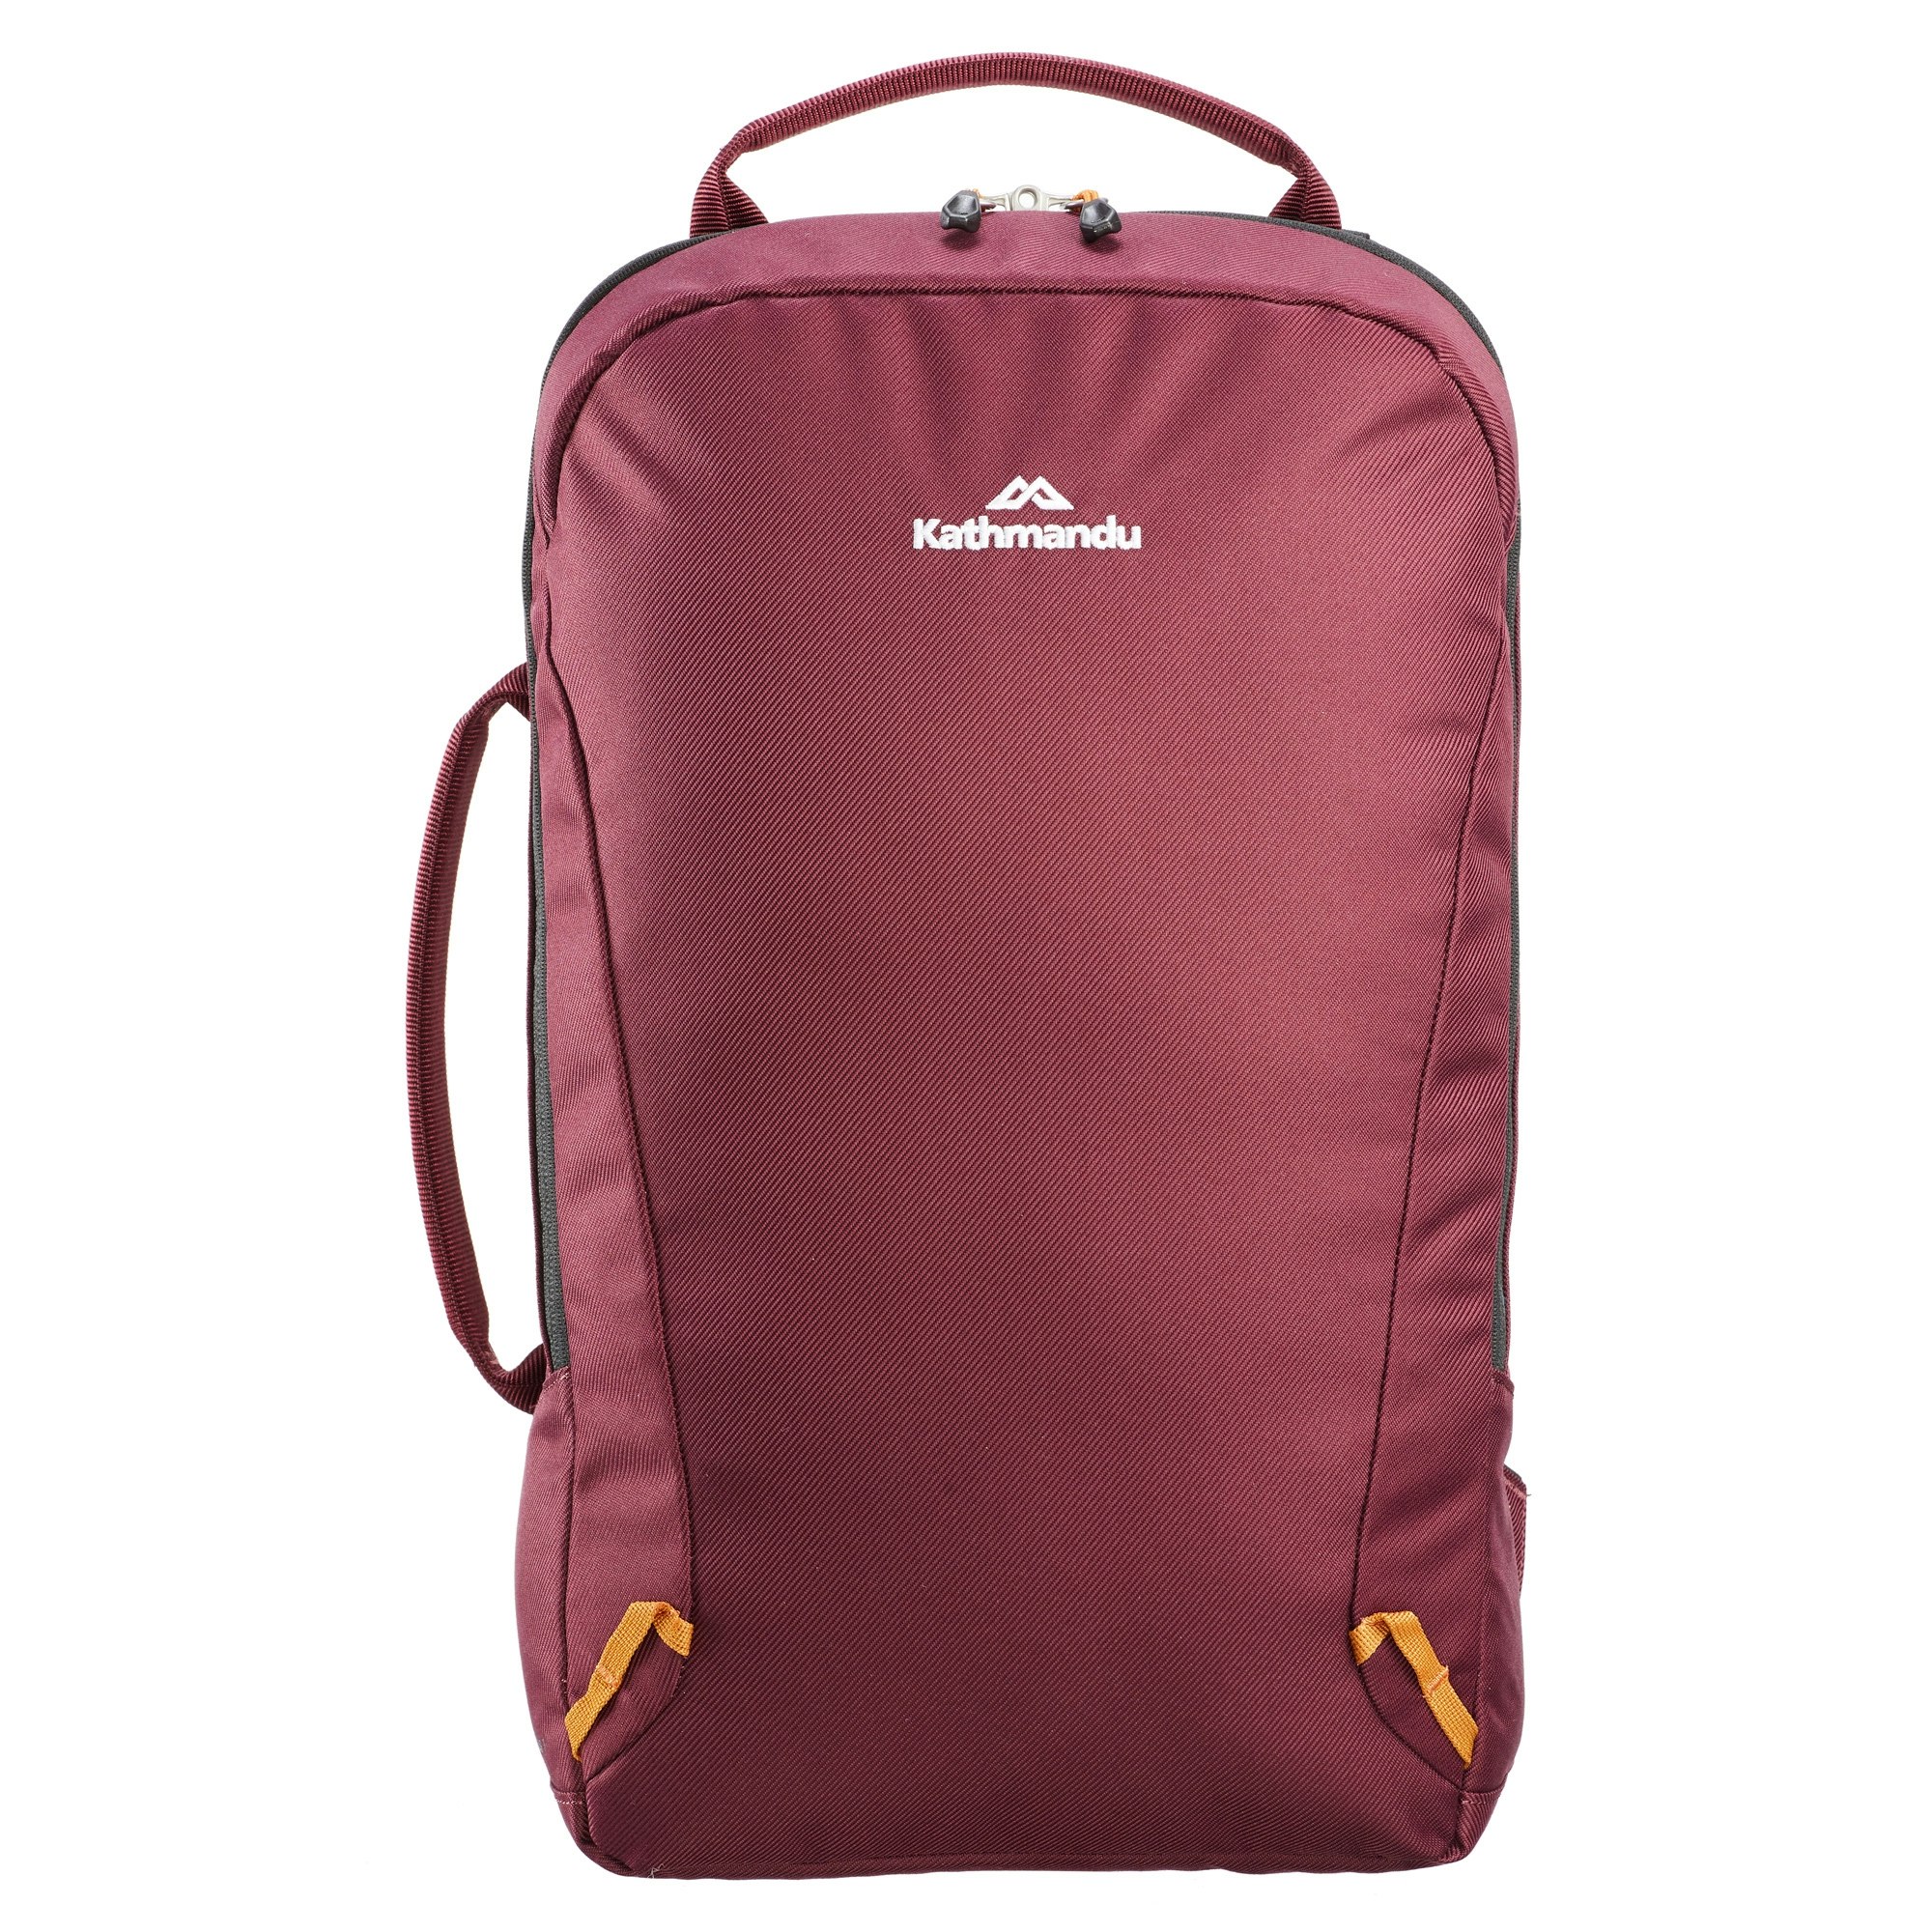 NEW Kathmandu Litehaul 12L Plus 1 Laptop Sleeve Daypack Bag Travel Backpack | eBay